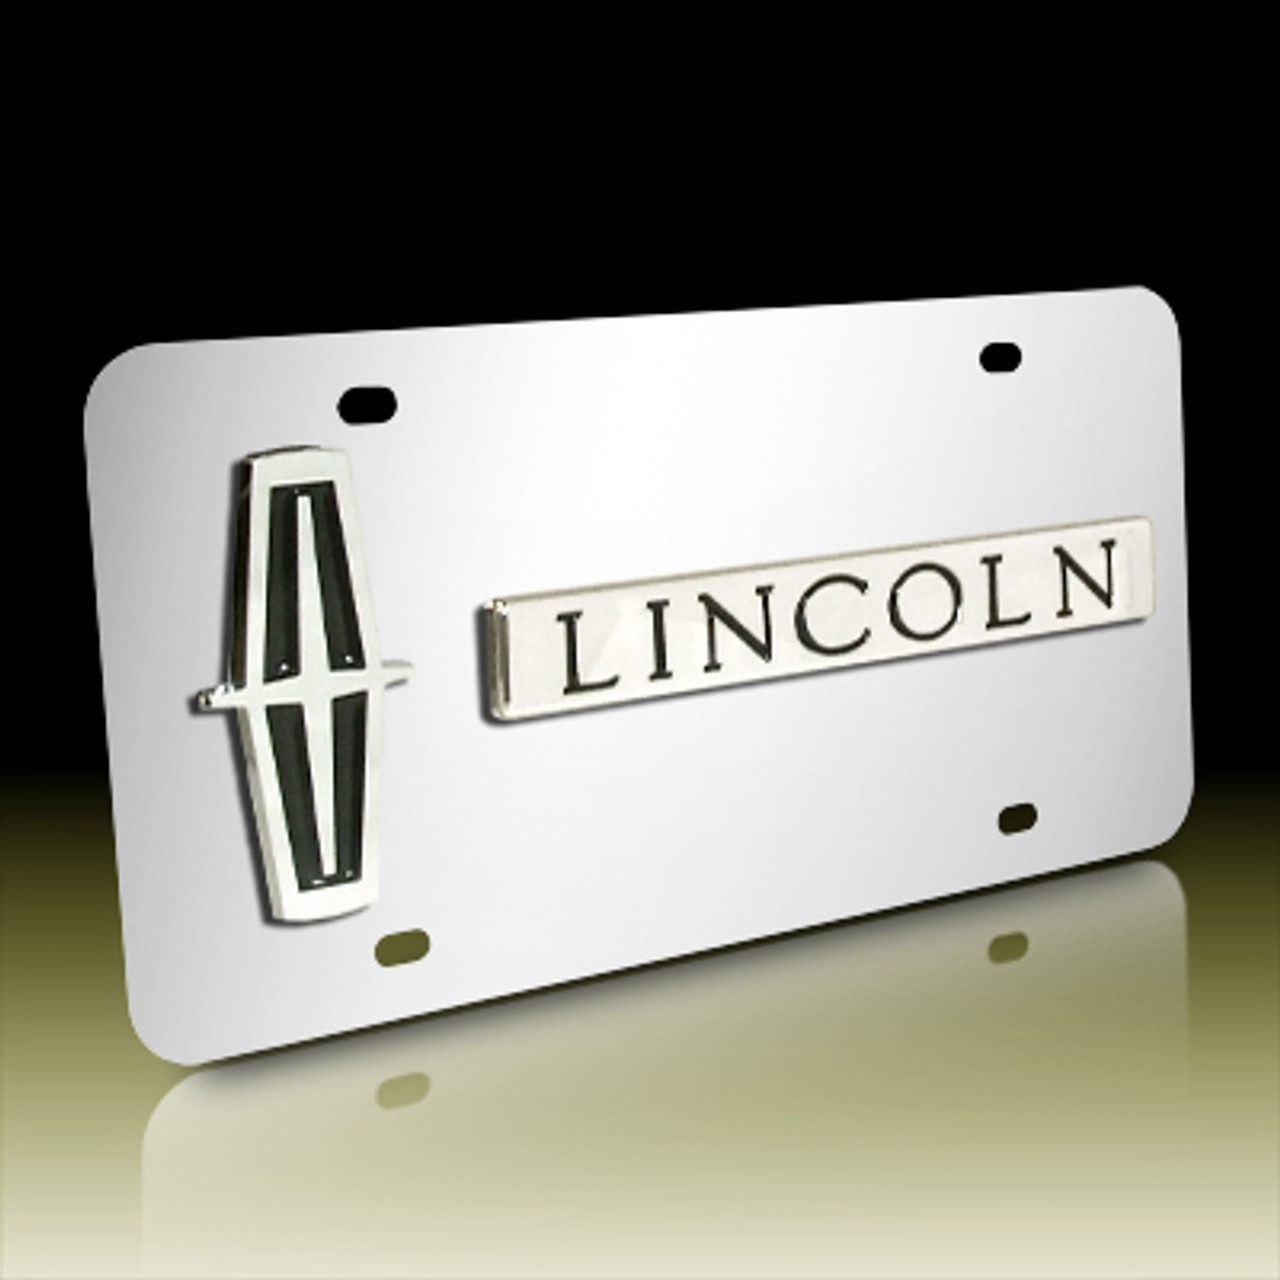 American Auto Emblems: LINCOLN